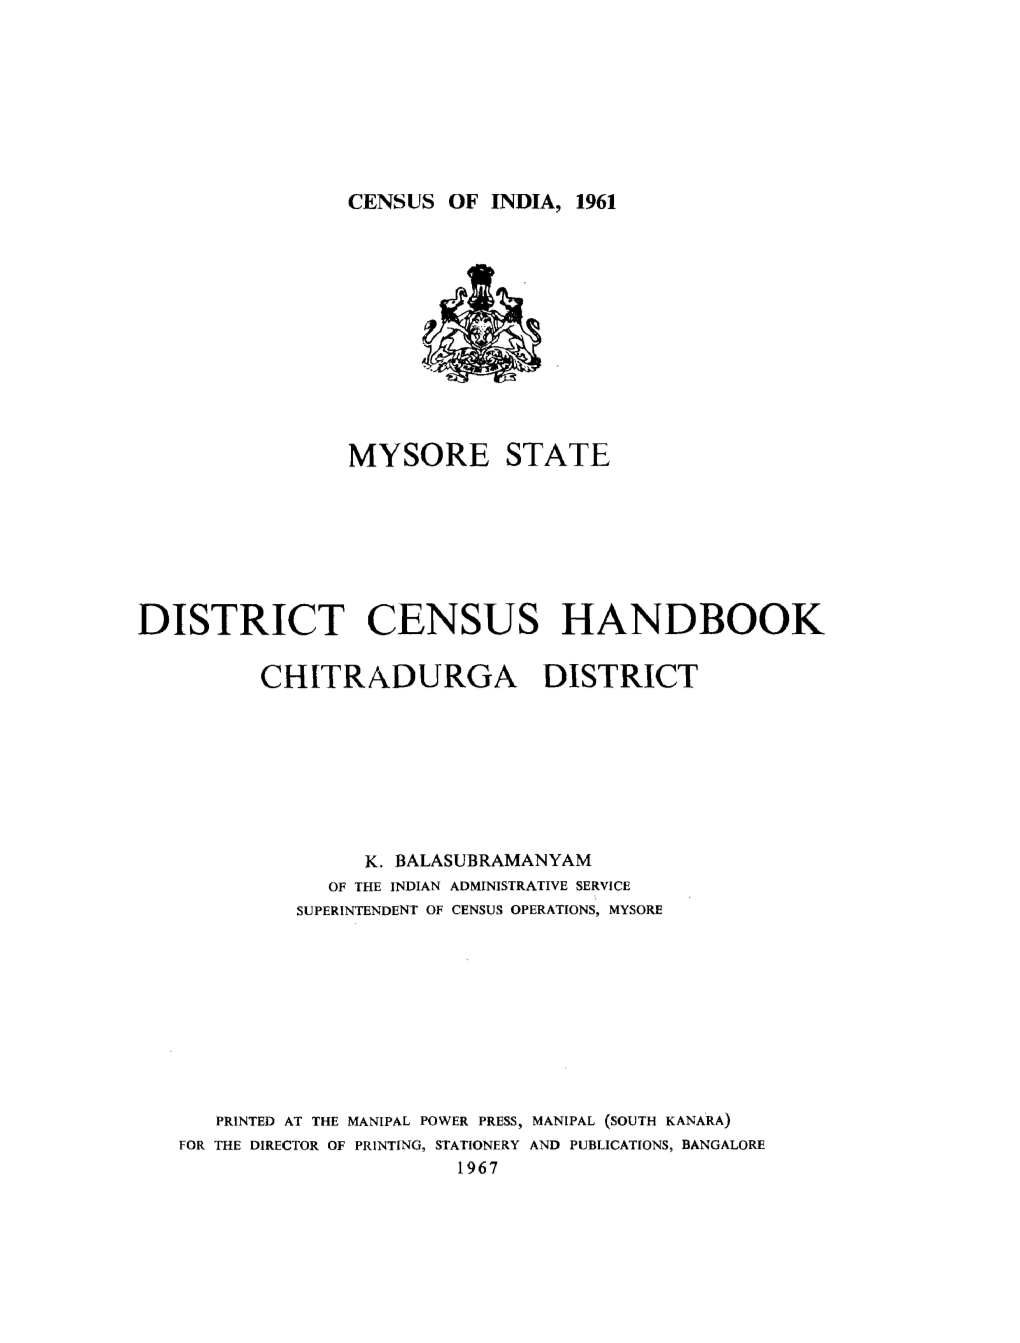 District Census Handbook, Chitradurga